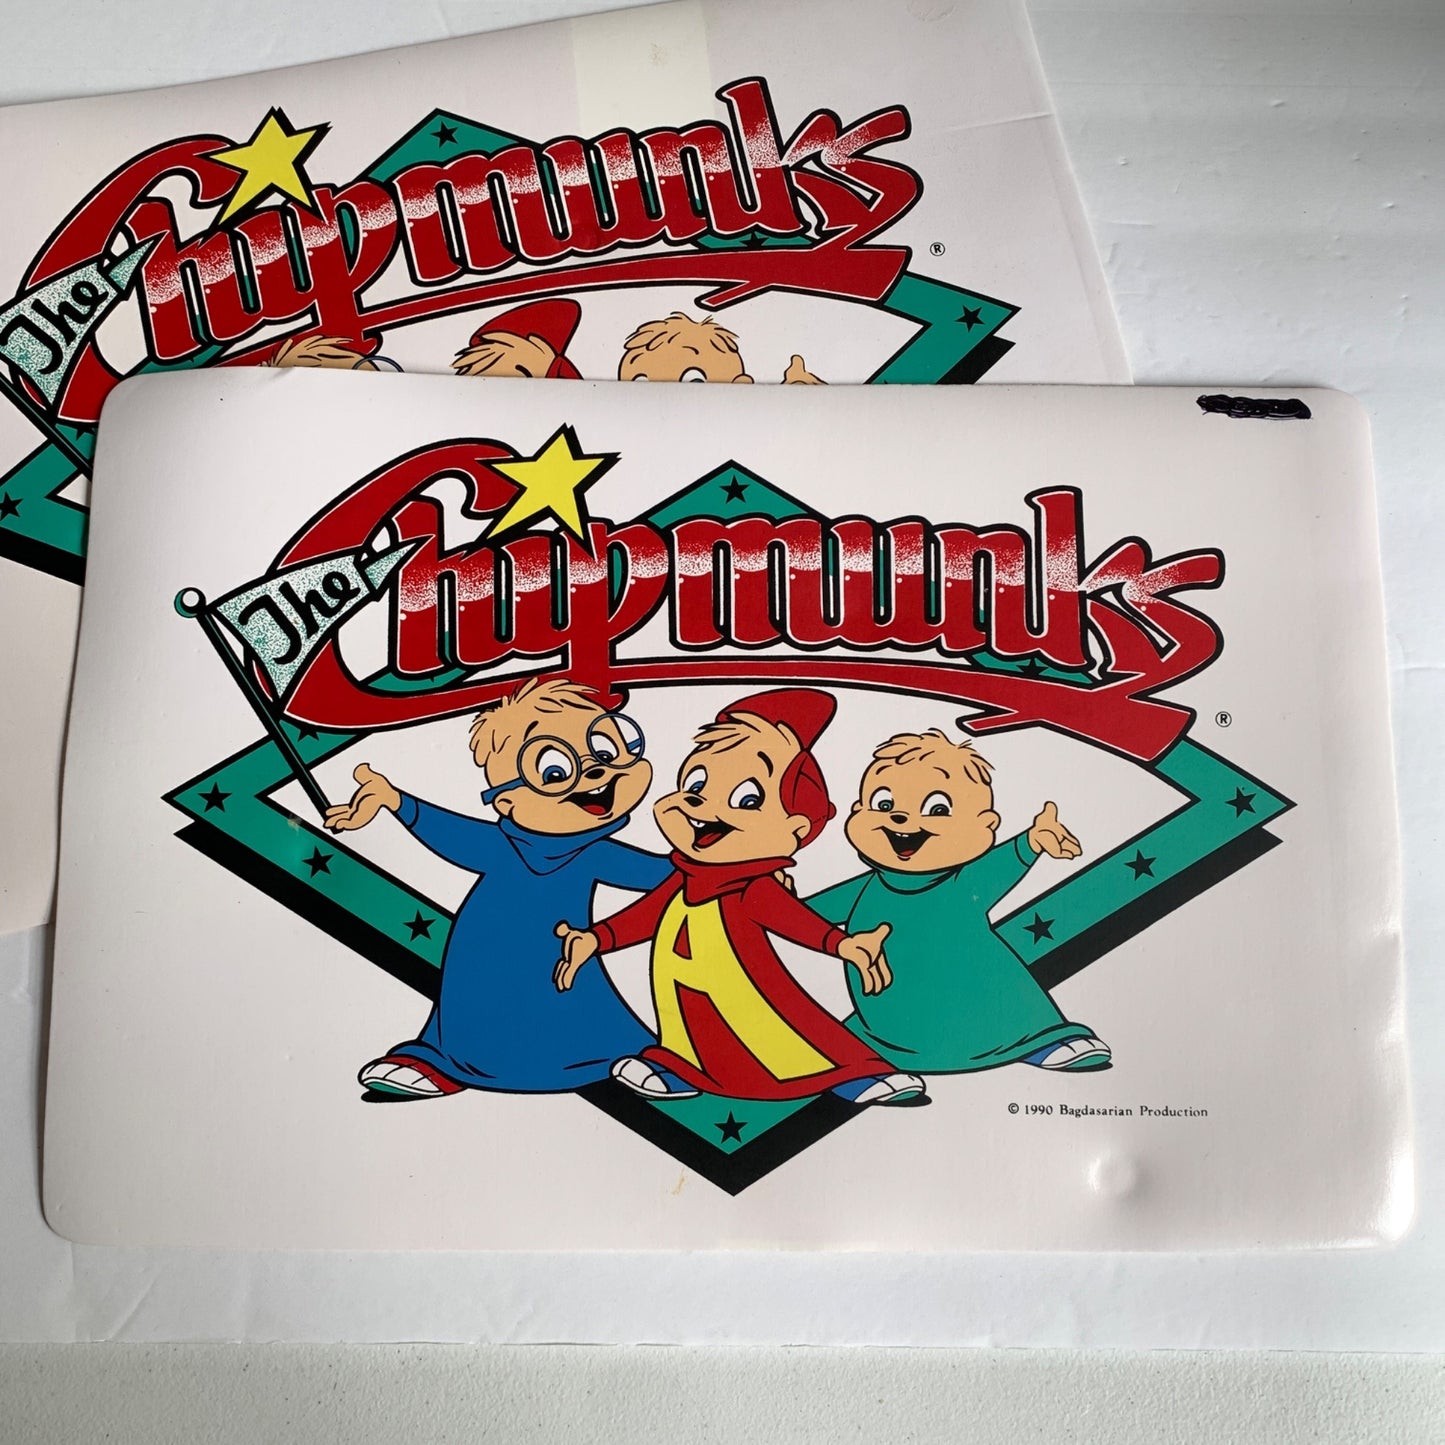 Vintage | The Chipmunks 1990 Placemats Set of 3